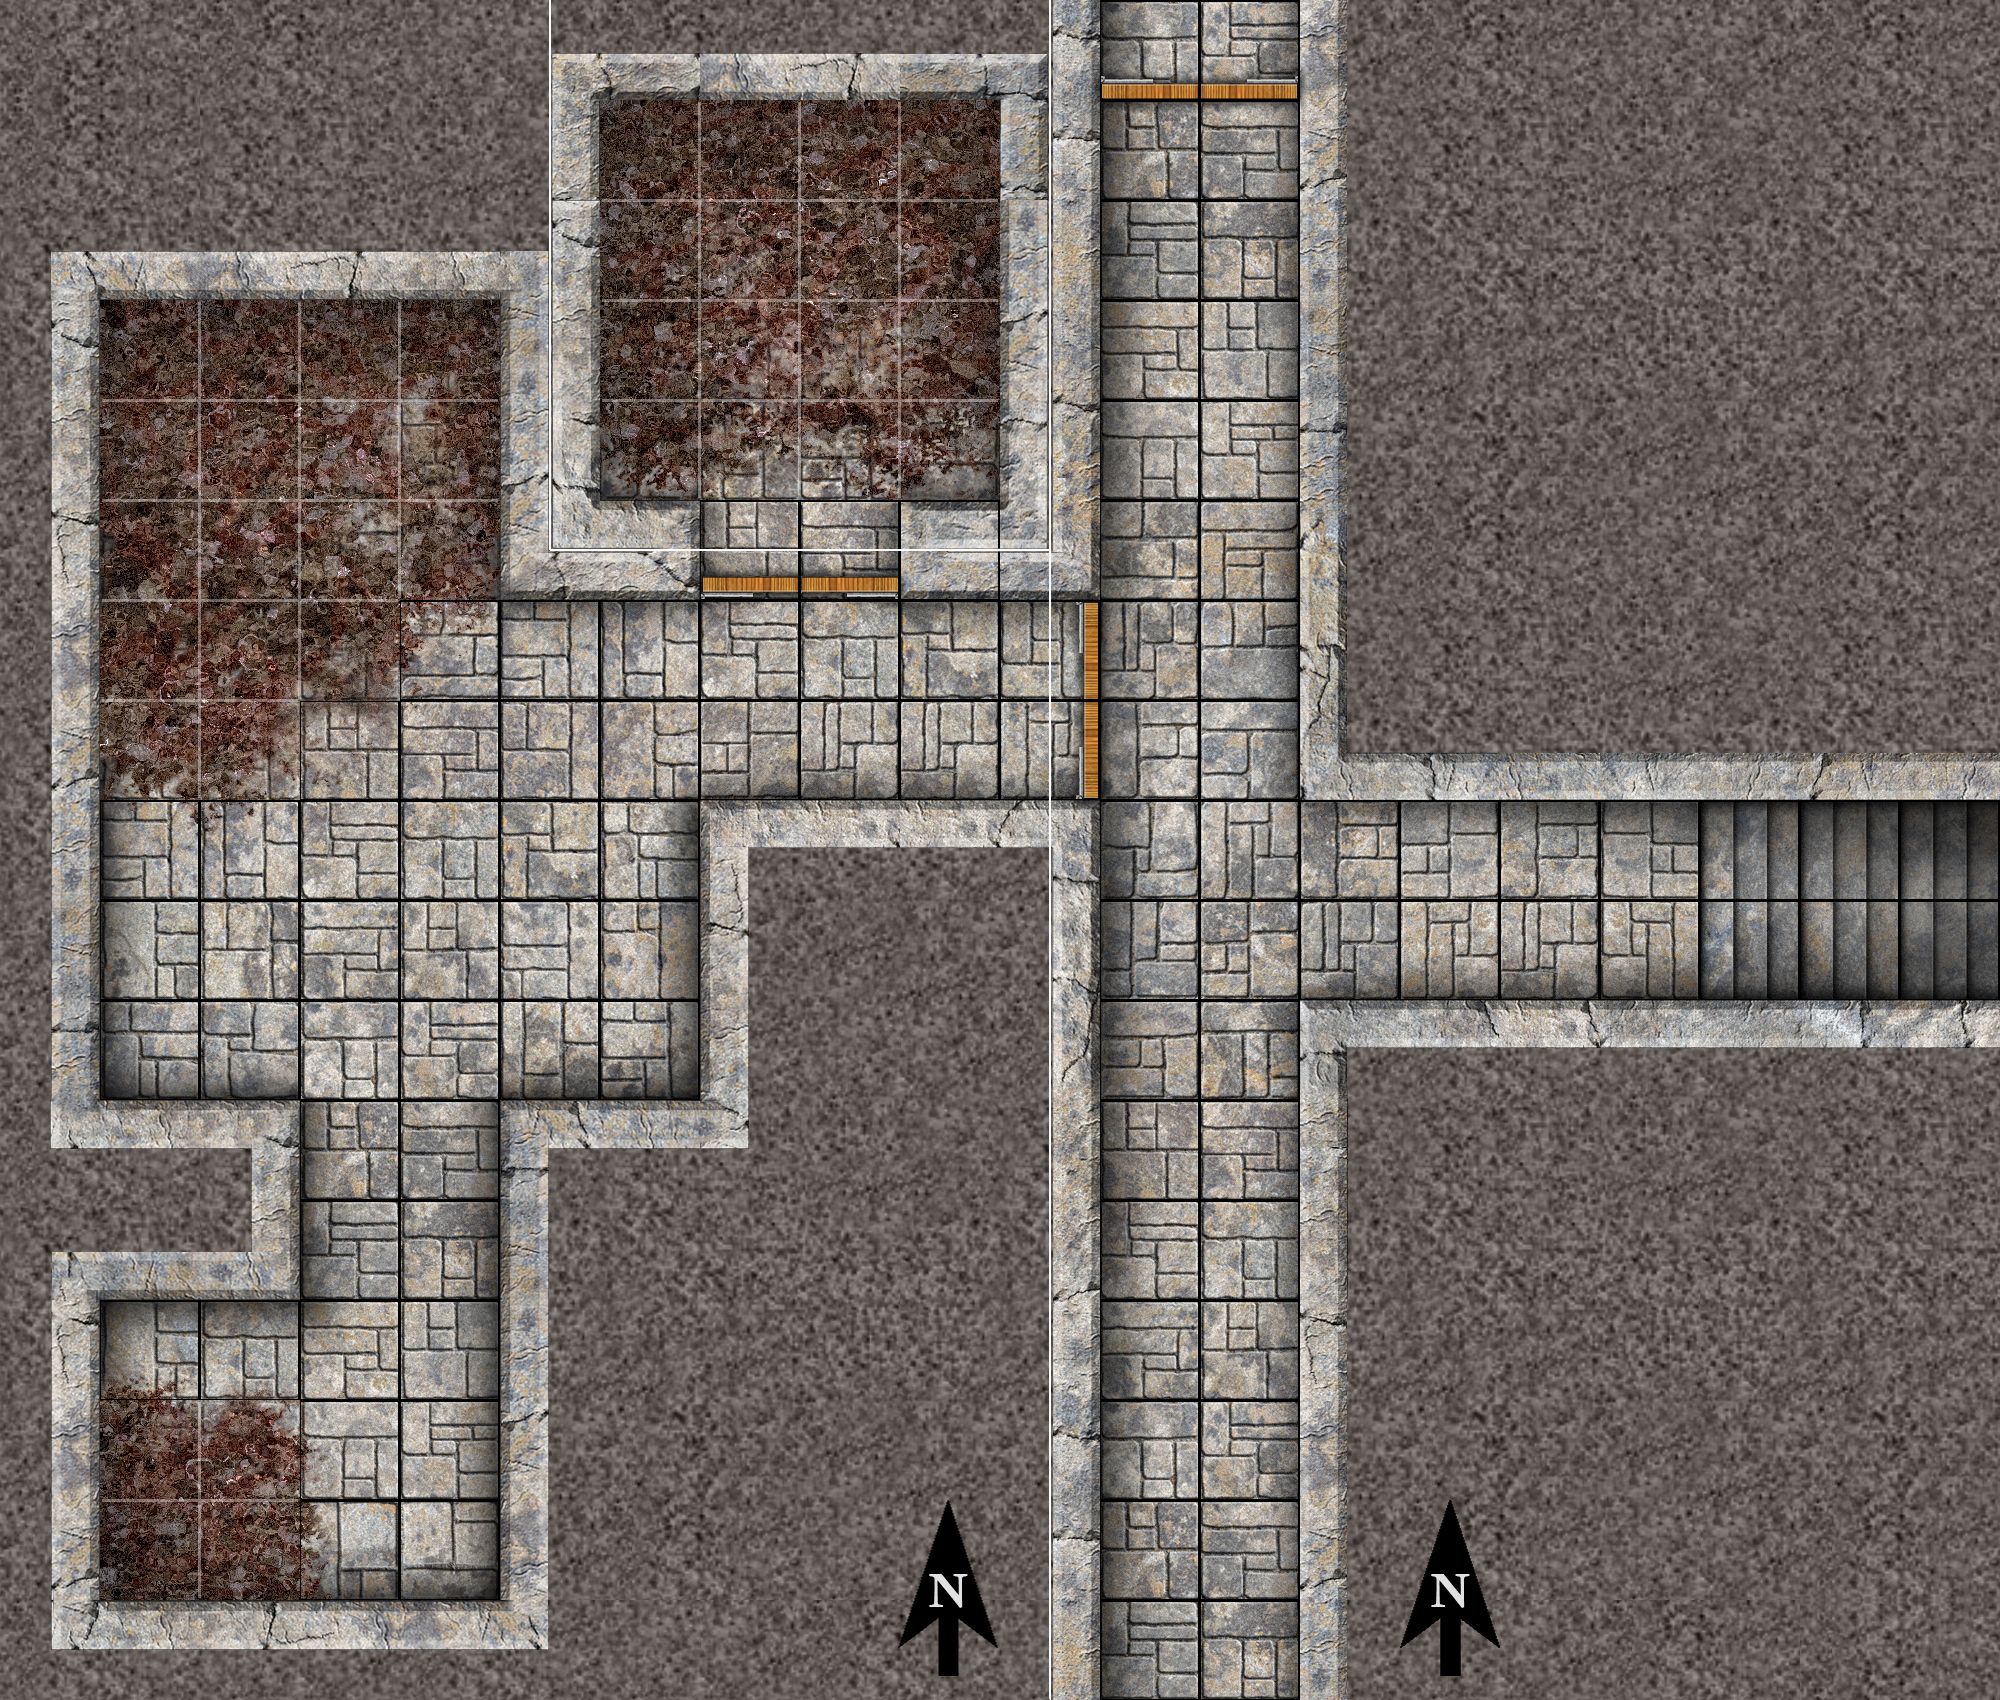 H3 Pyramid of Shadows: Area 2